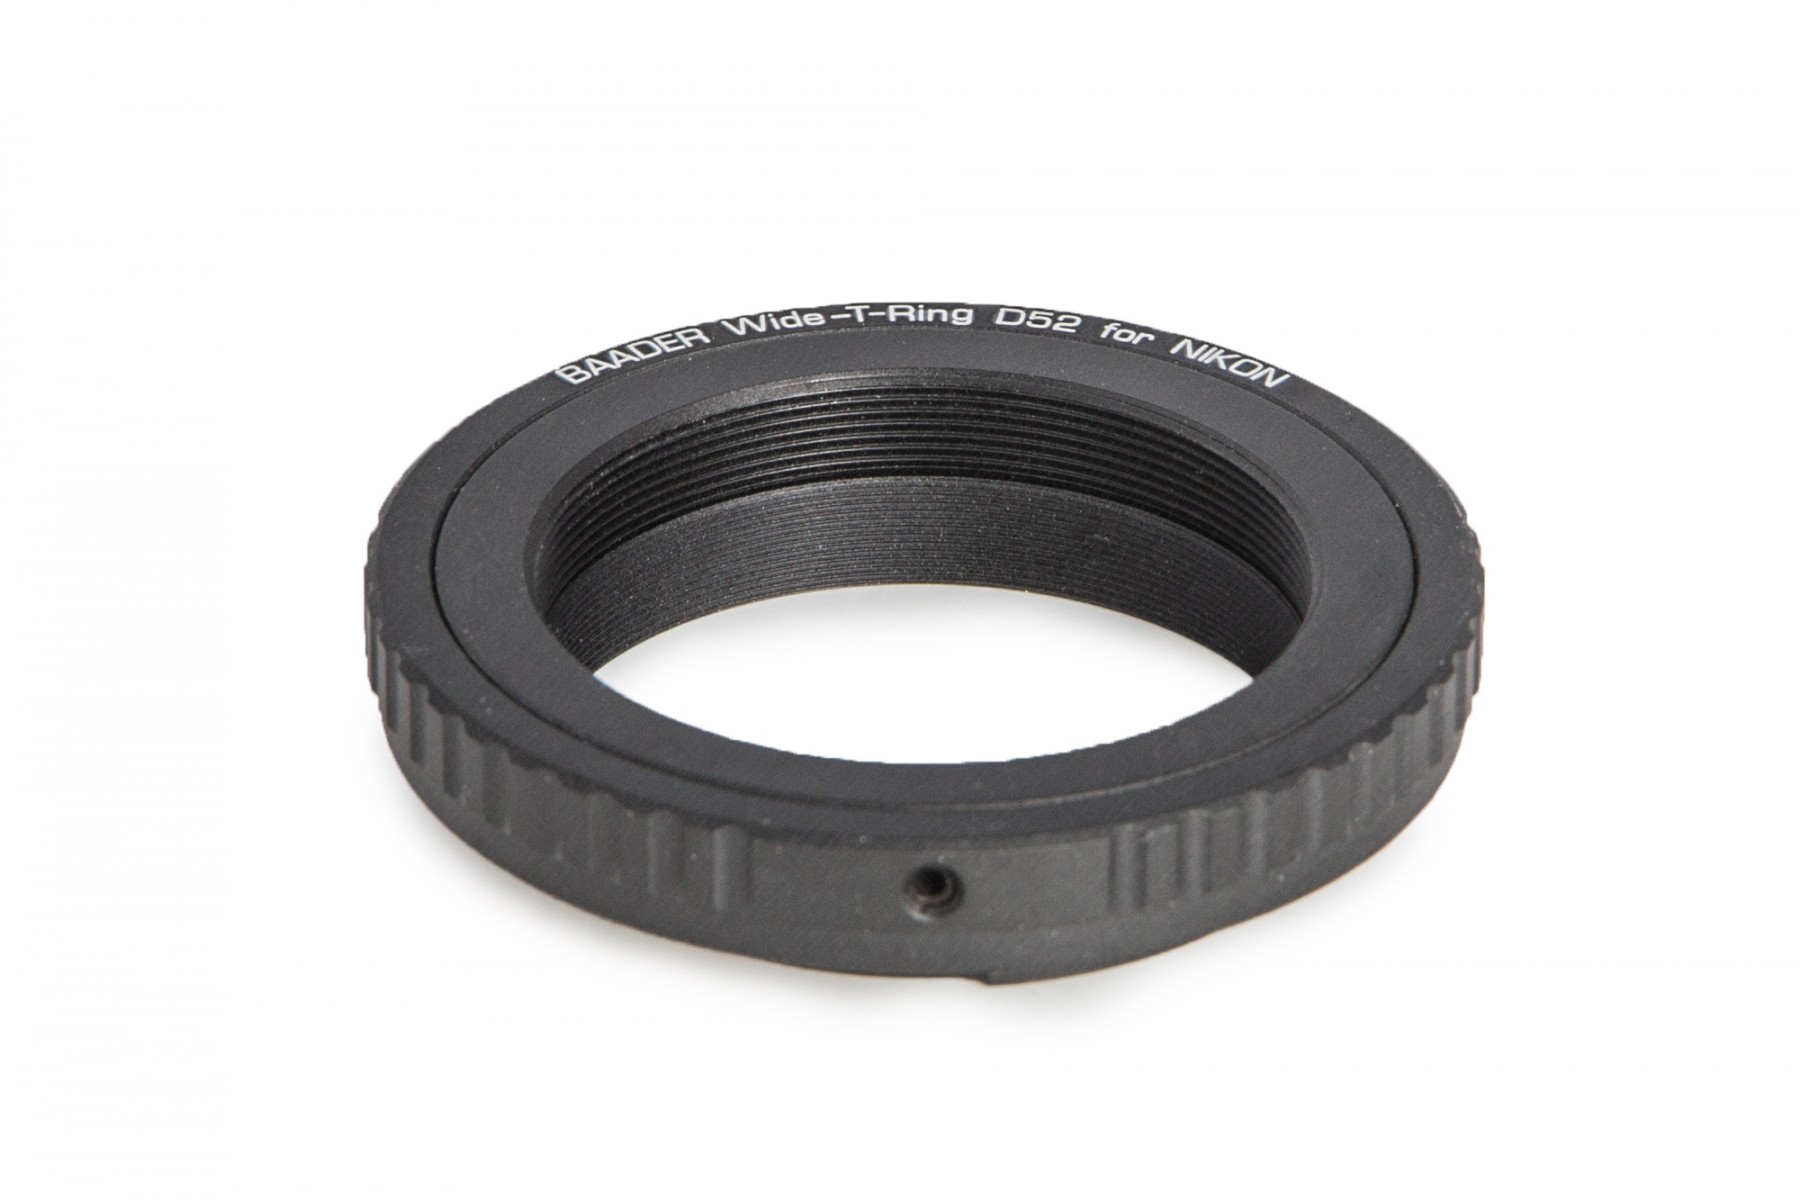 Fits All Nikon DSLR/SLR Cameras Astromania Metal T-Ring Adapter for Nikon DSLR/SLR 